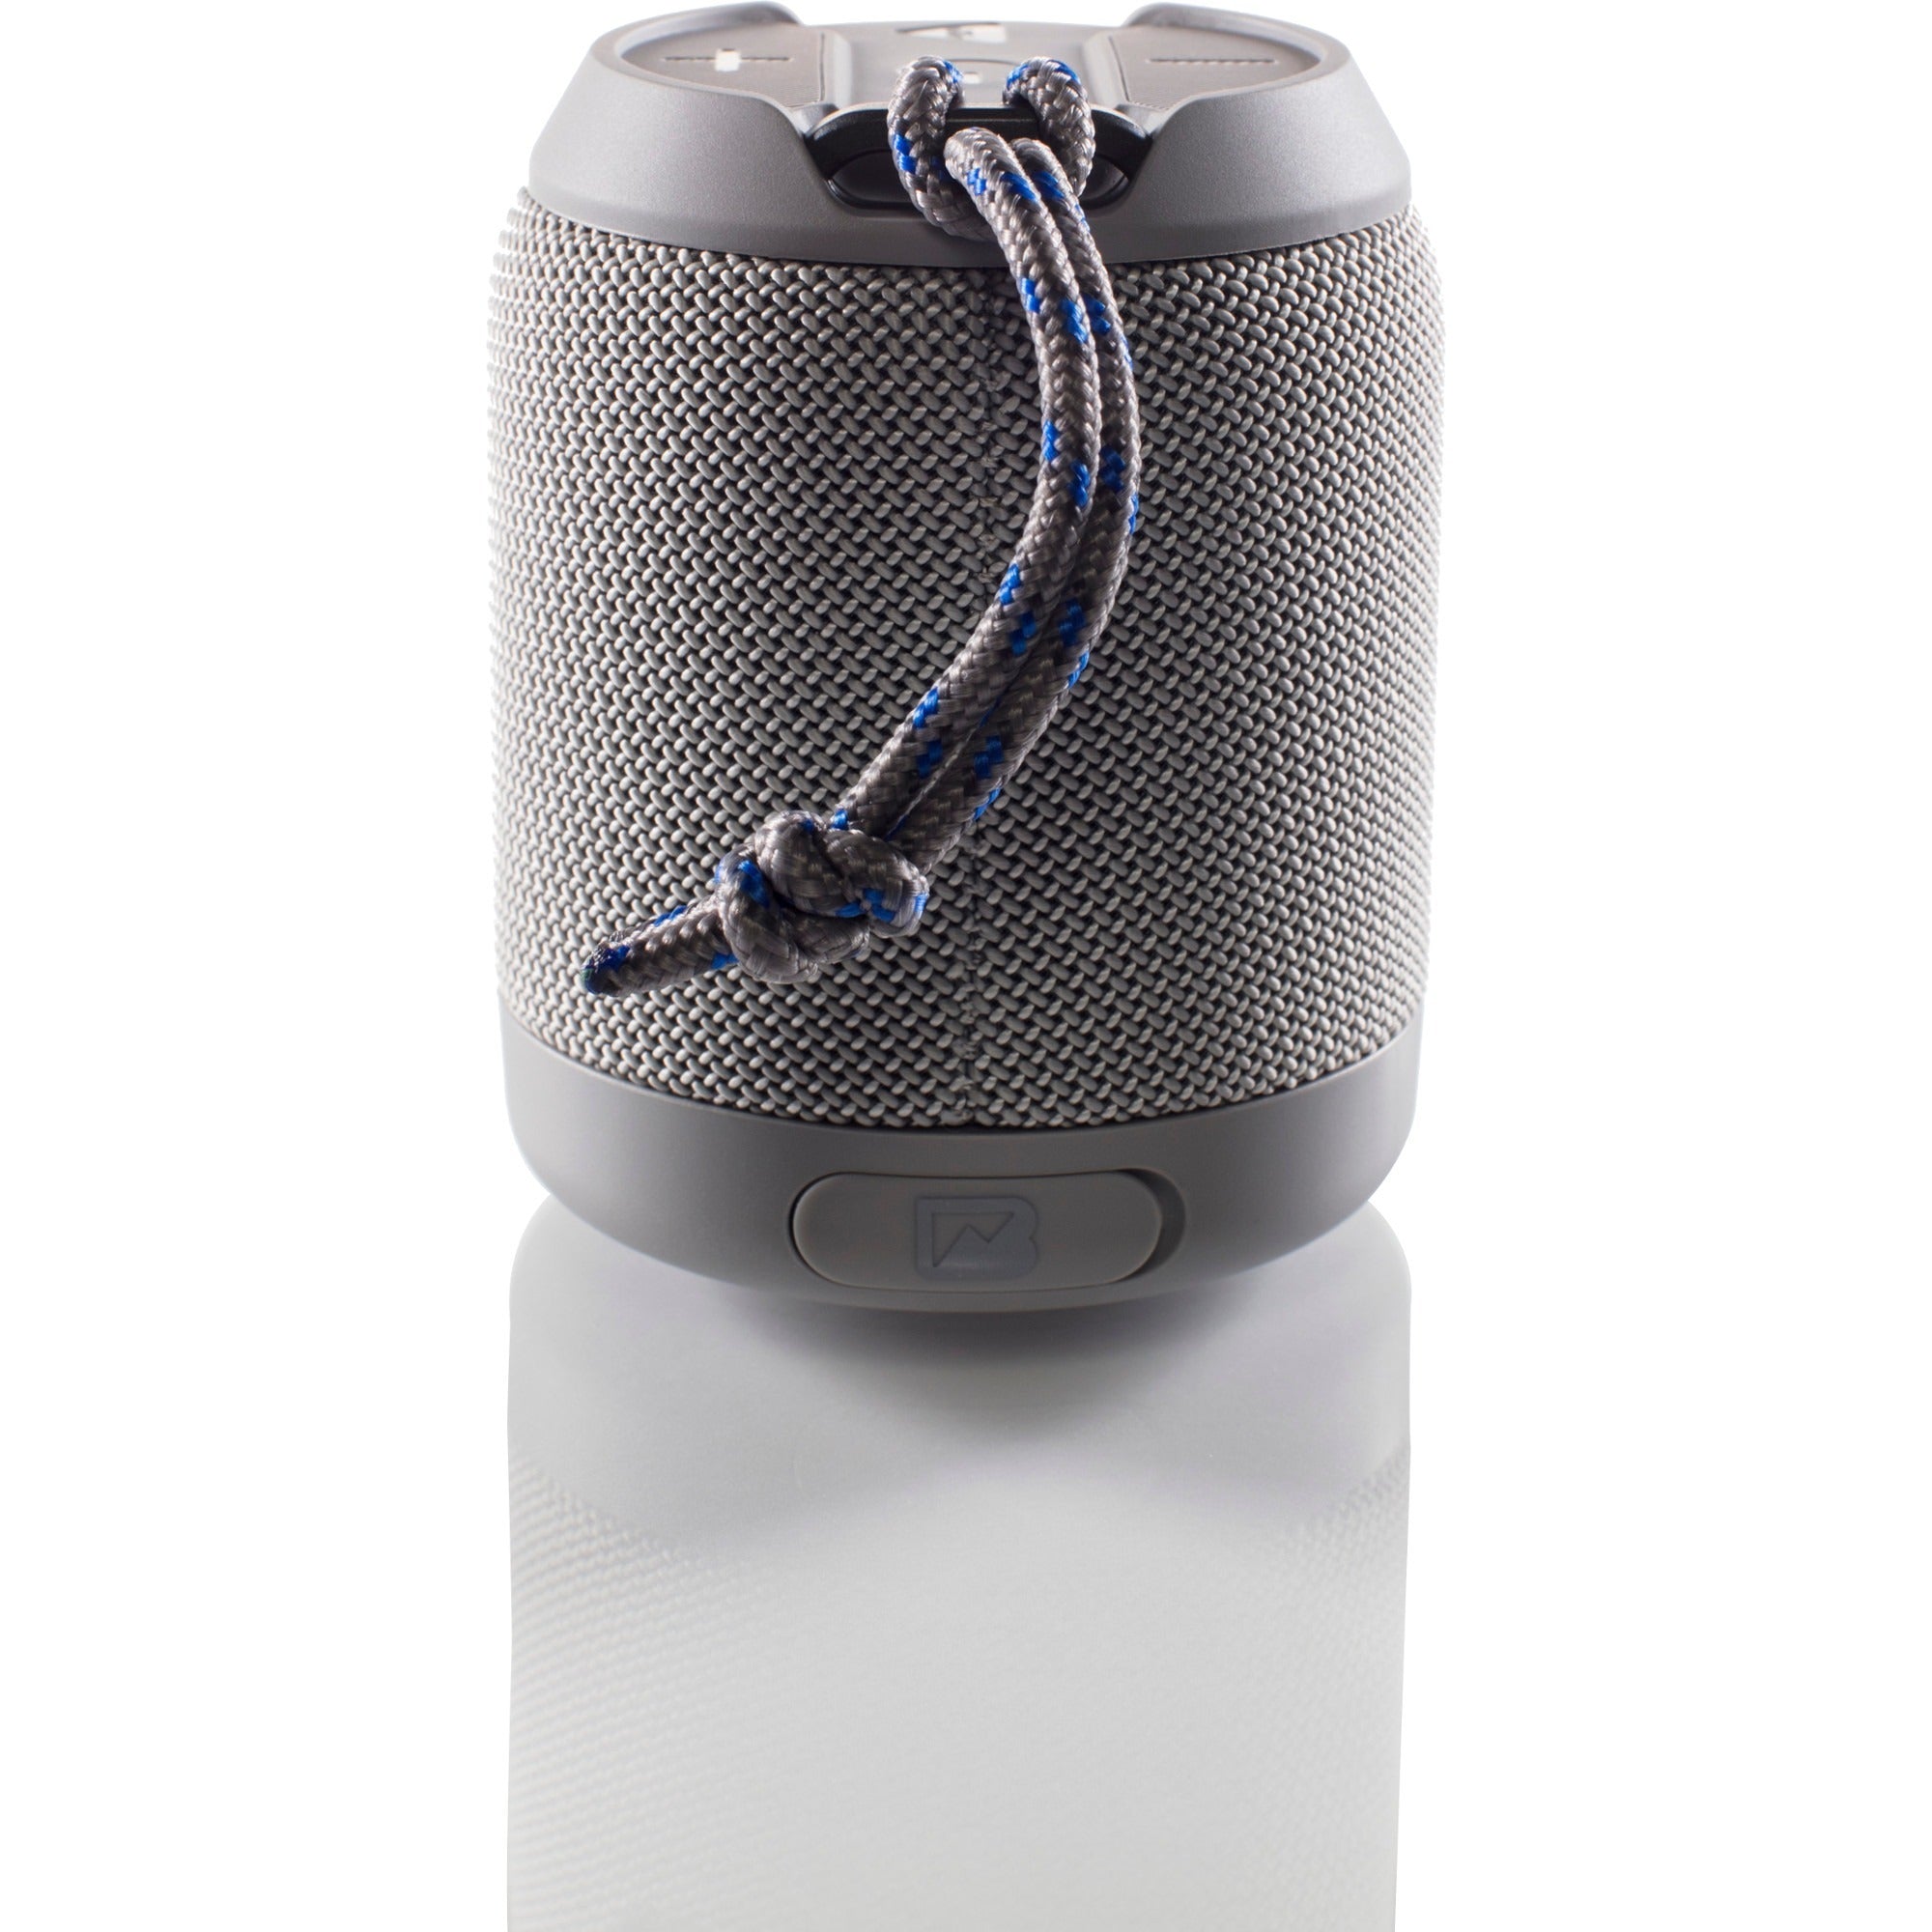 Braven BRV-MINI Bluetooth Speaker - PressReader